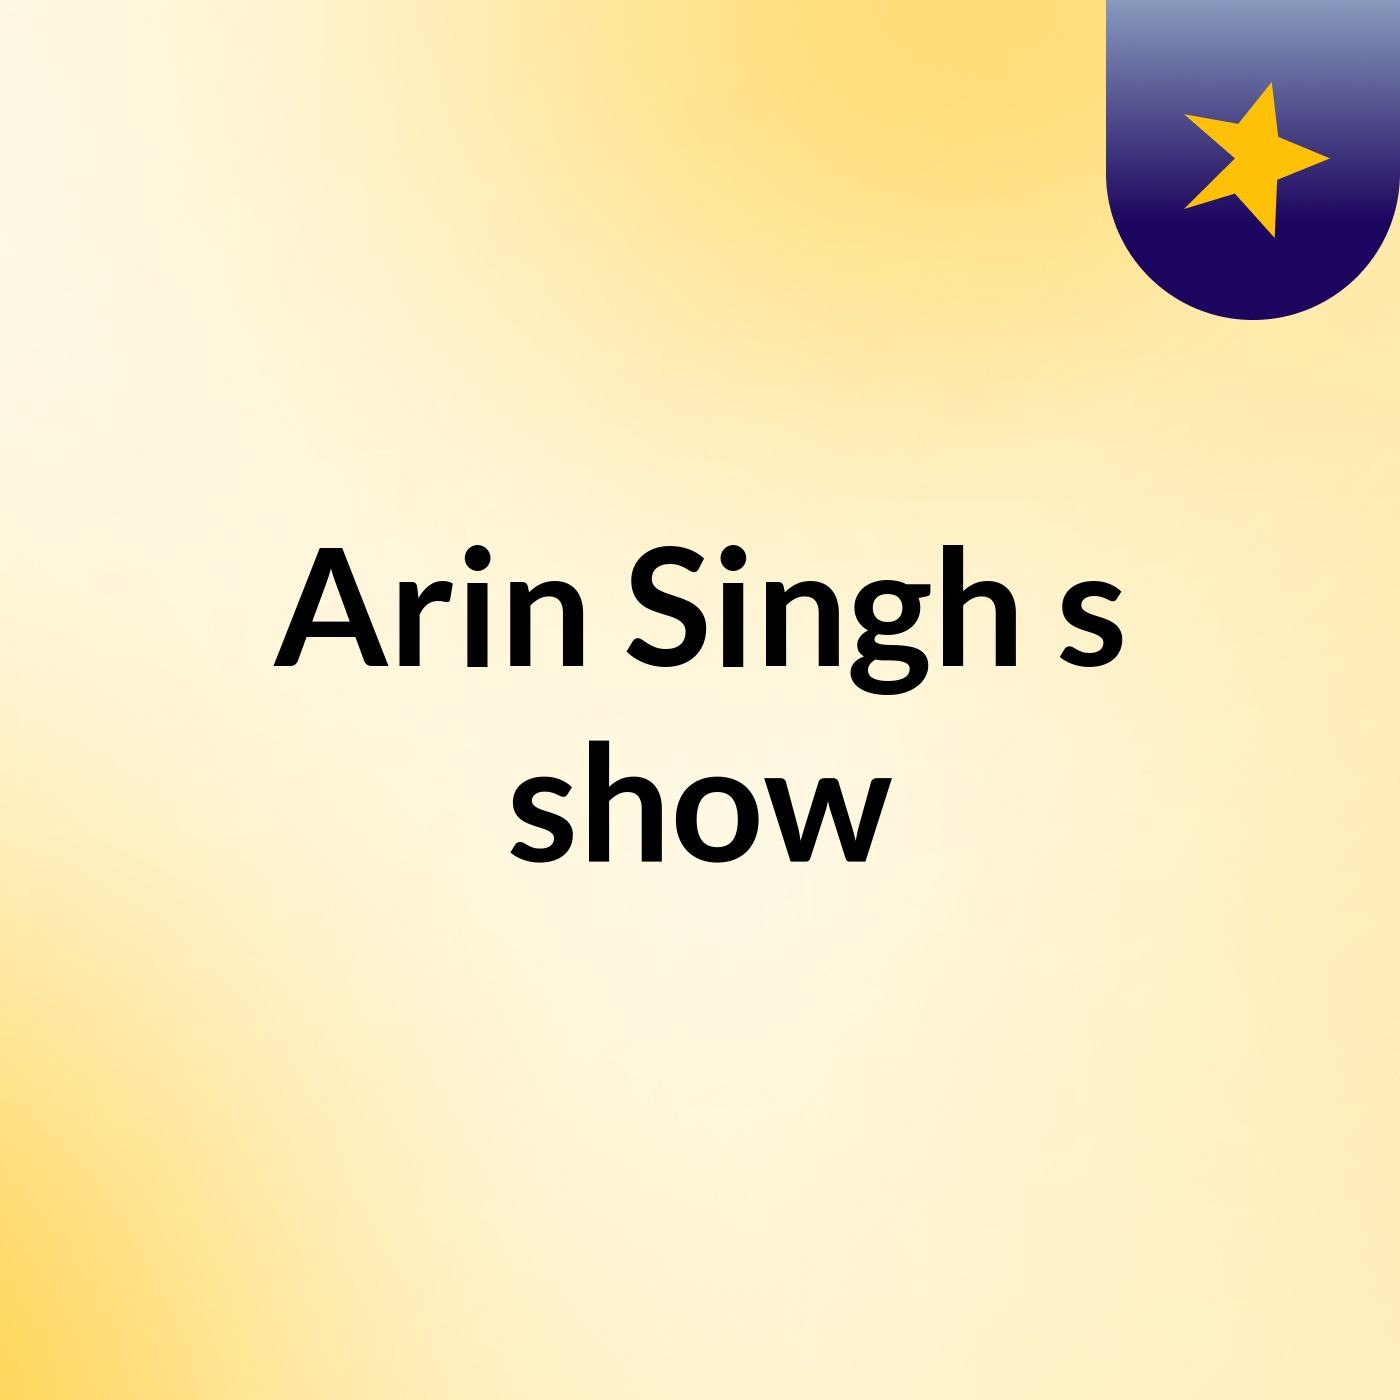 Arin Singh's show